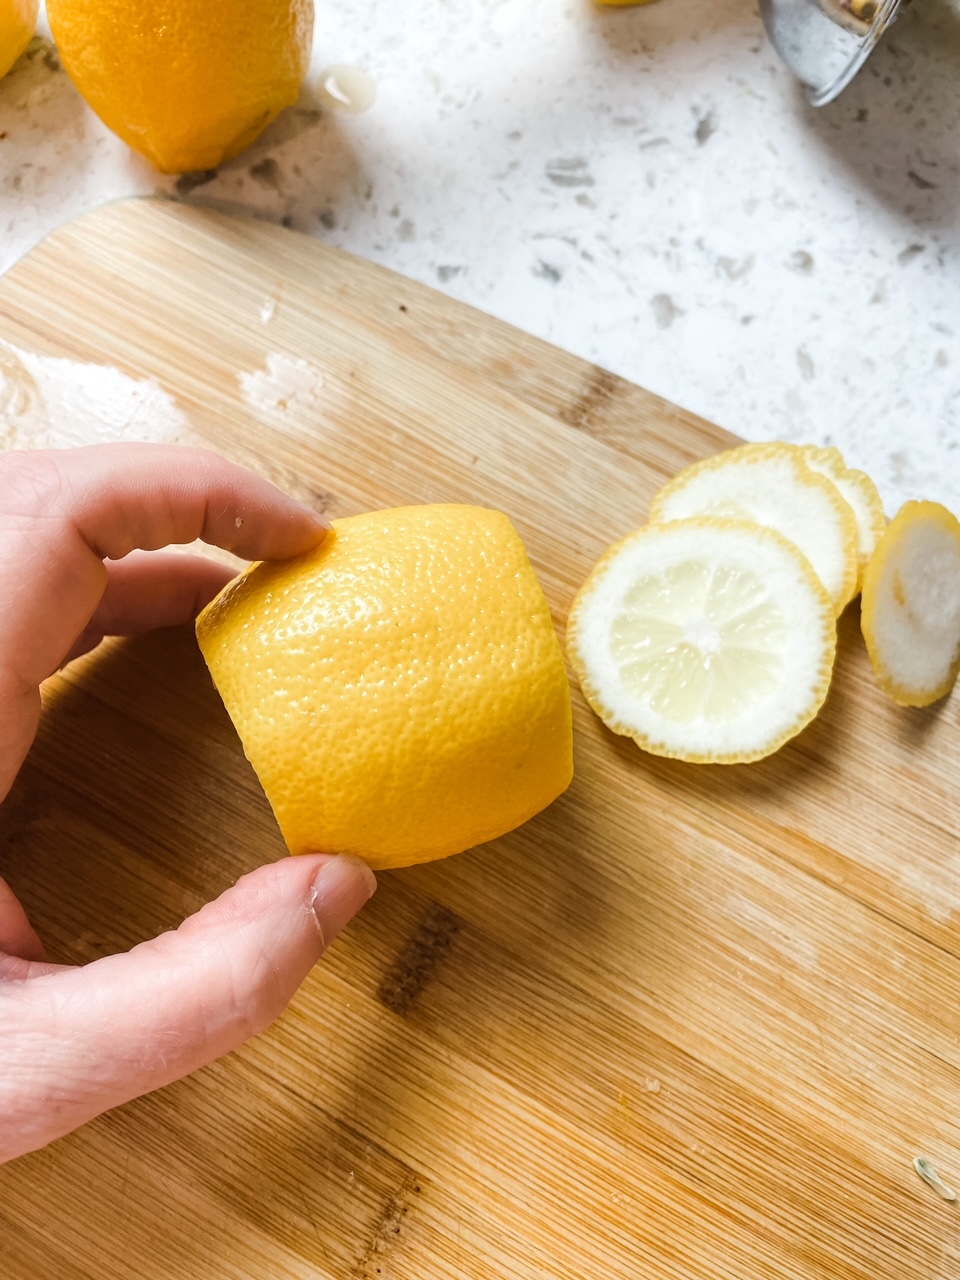 Marie slicing off the stem portion of the lemon